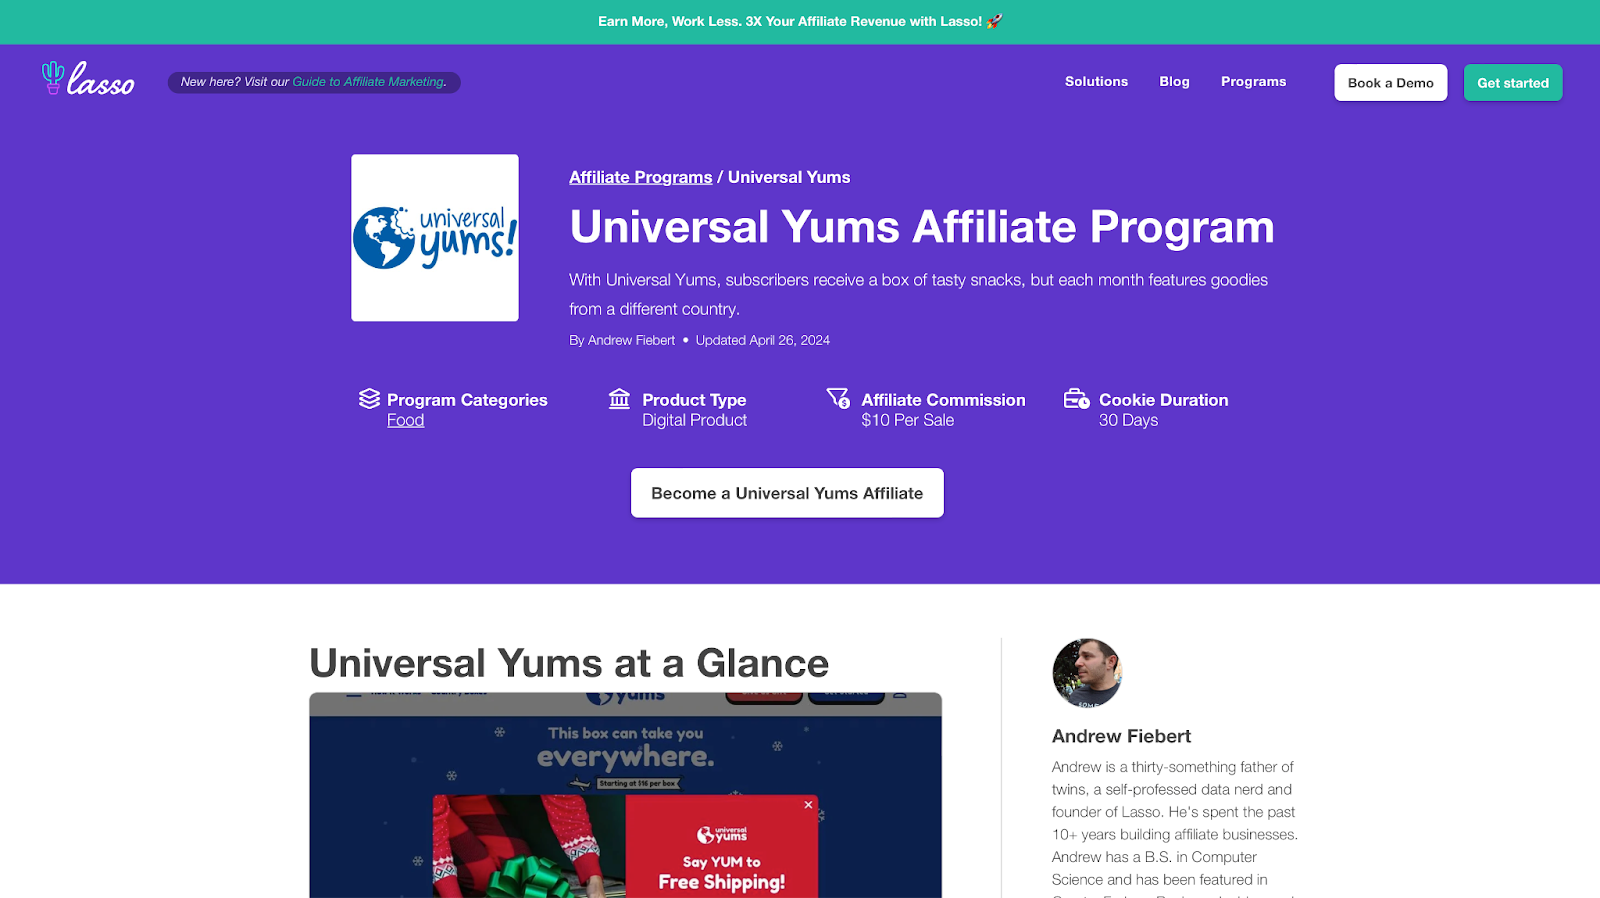 Universal Yums Affiliate Program